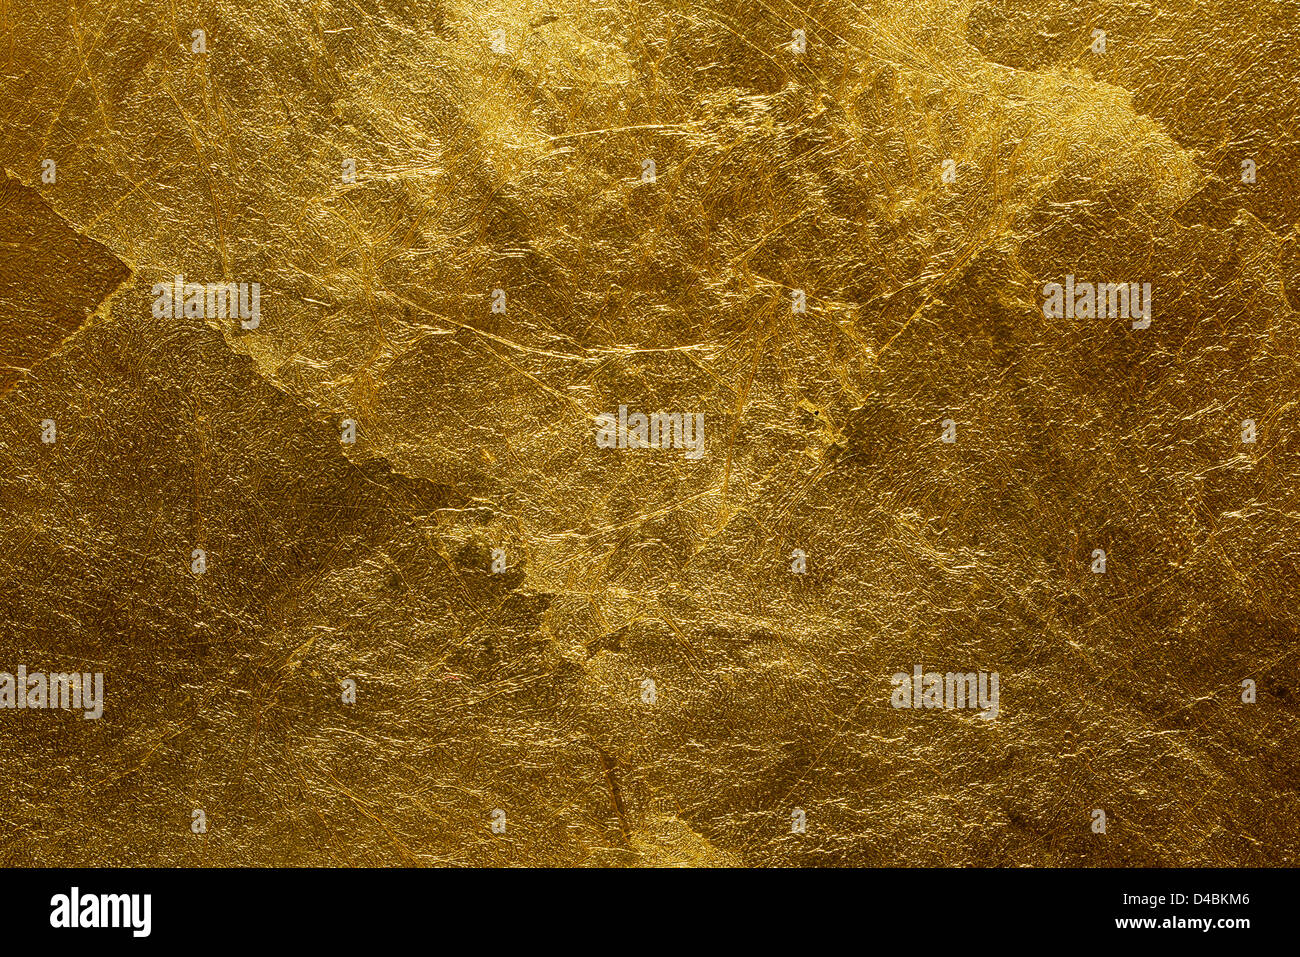 https://c8.alamy.com/comp/D4BKM6/gold-painted-stone-wall-texture-D4BKM6.jpg